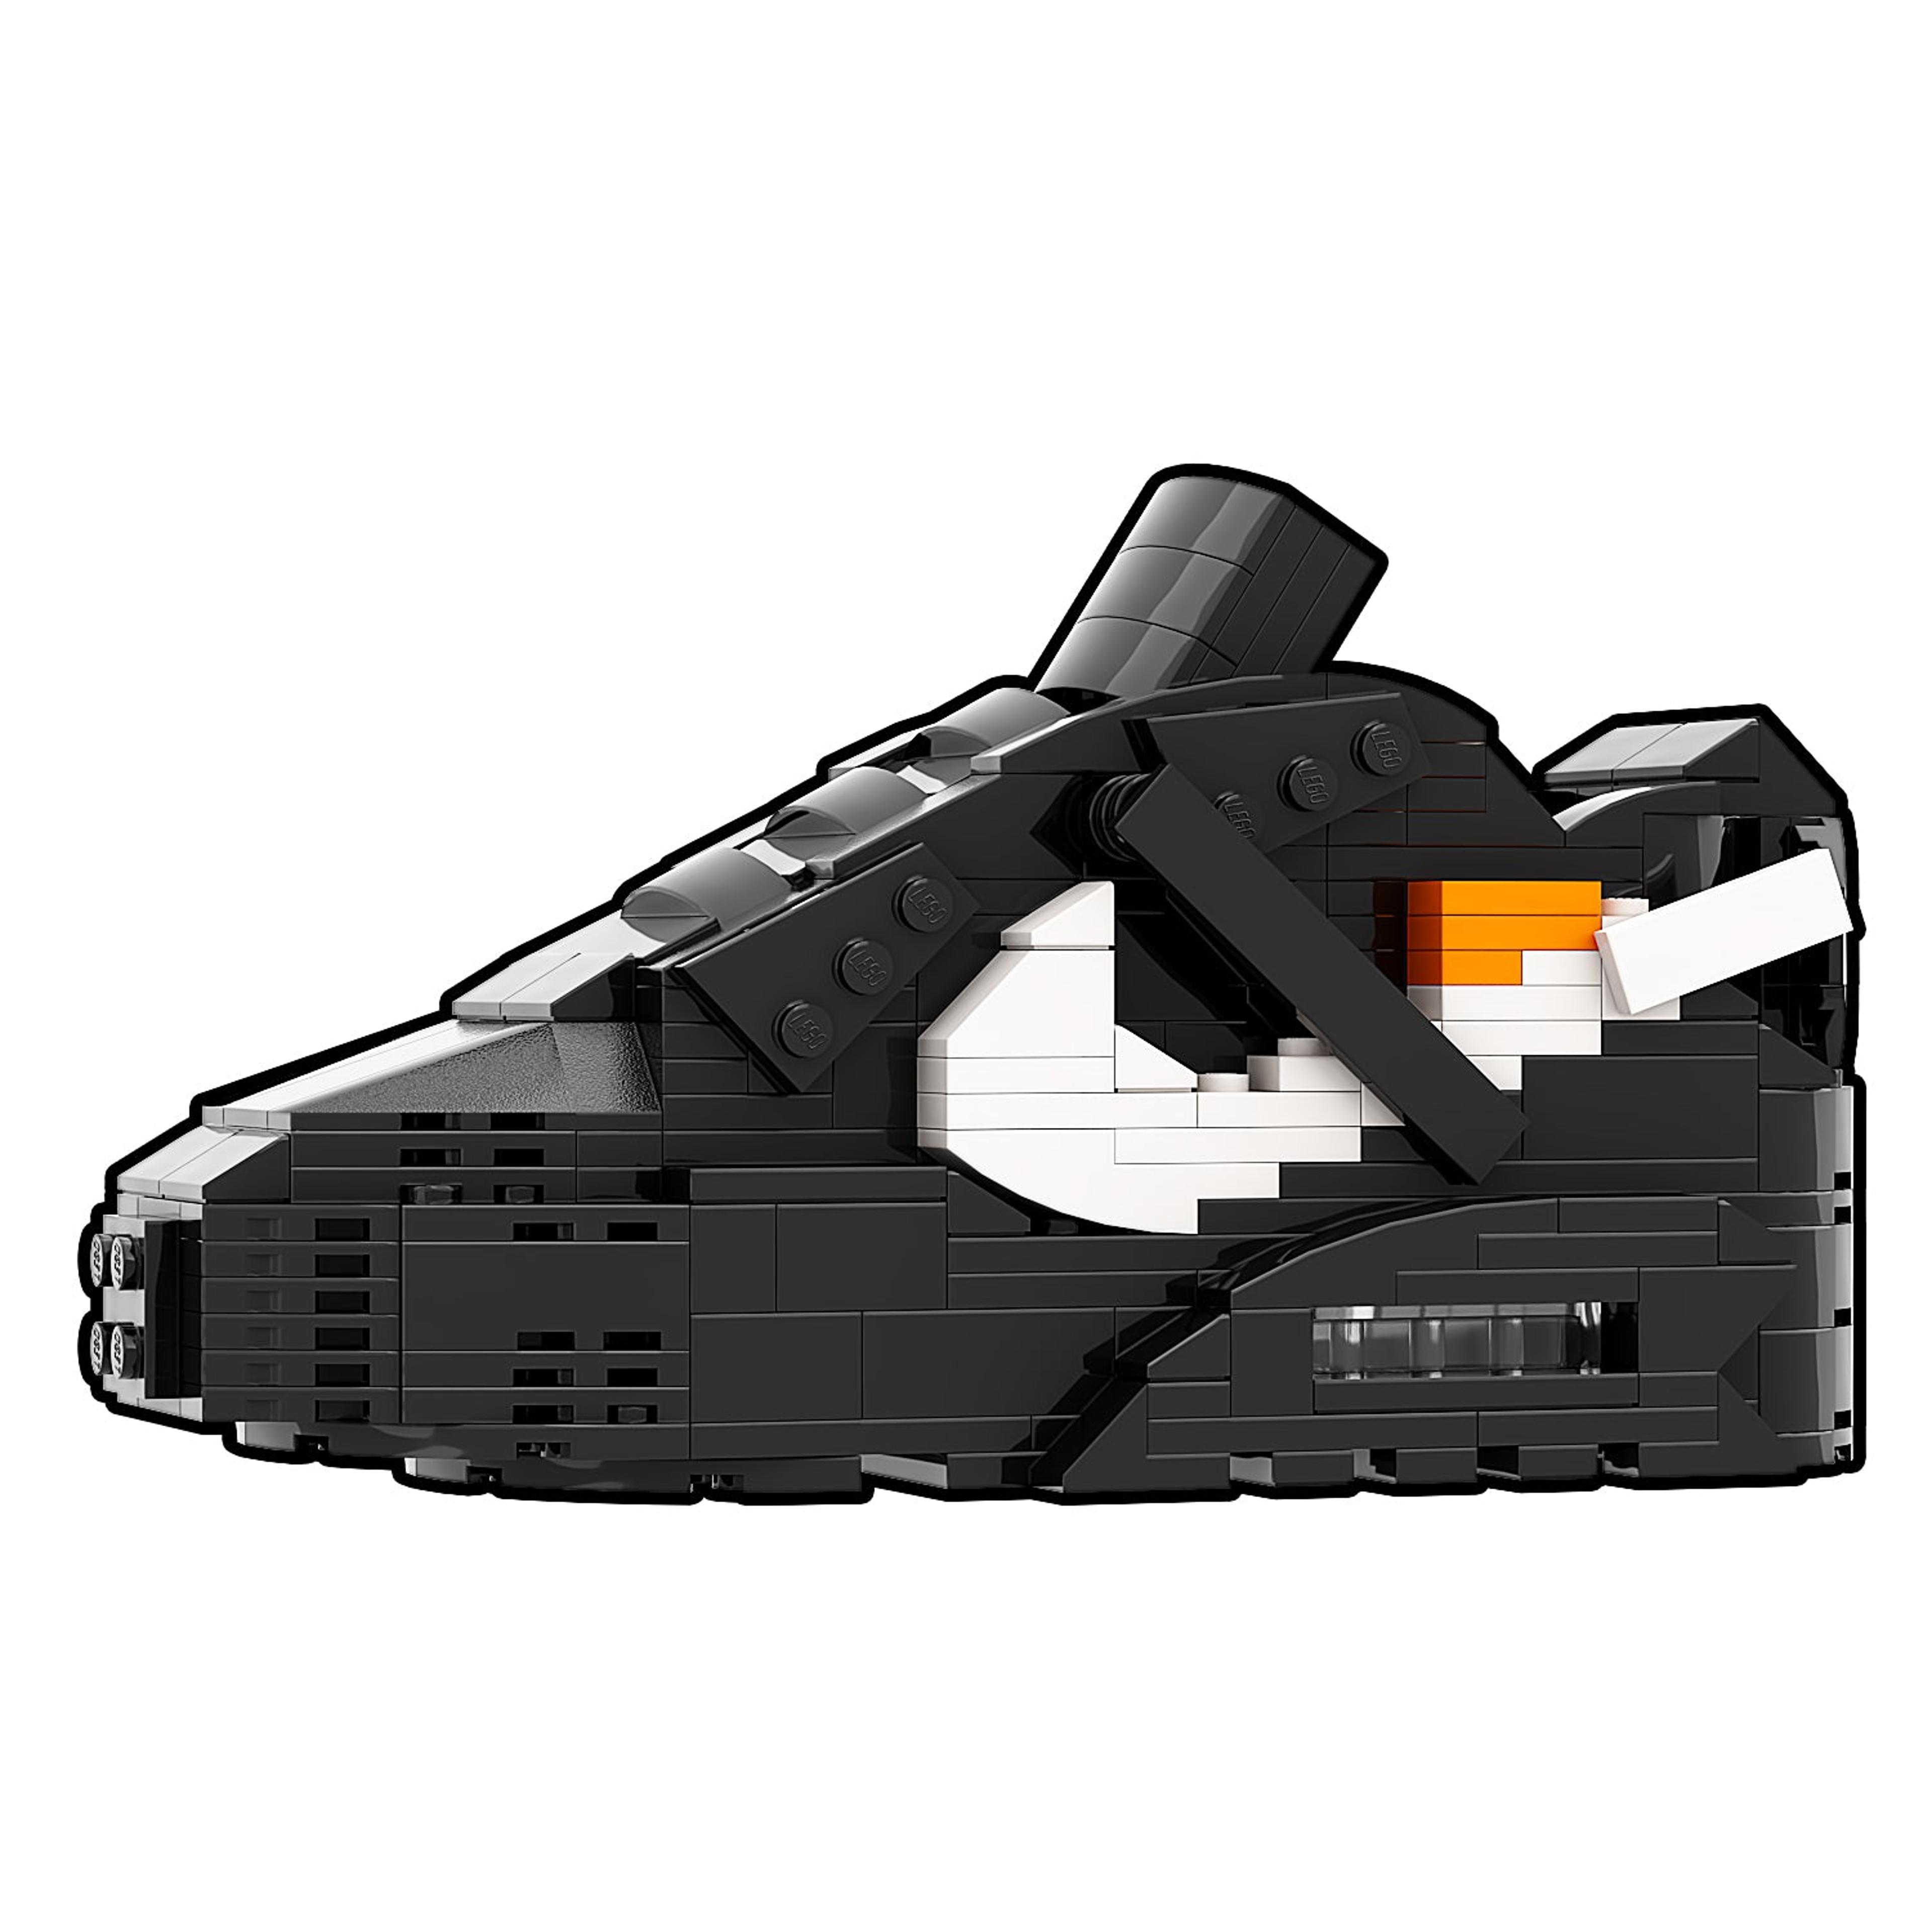 REGULAR Air Max 90 "Off-White Black" Sneaker Bricks with Mini Fi